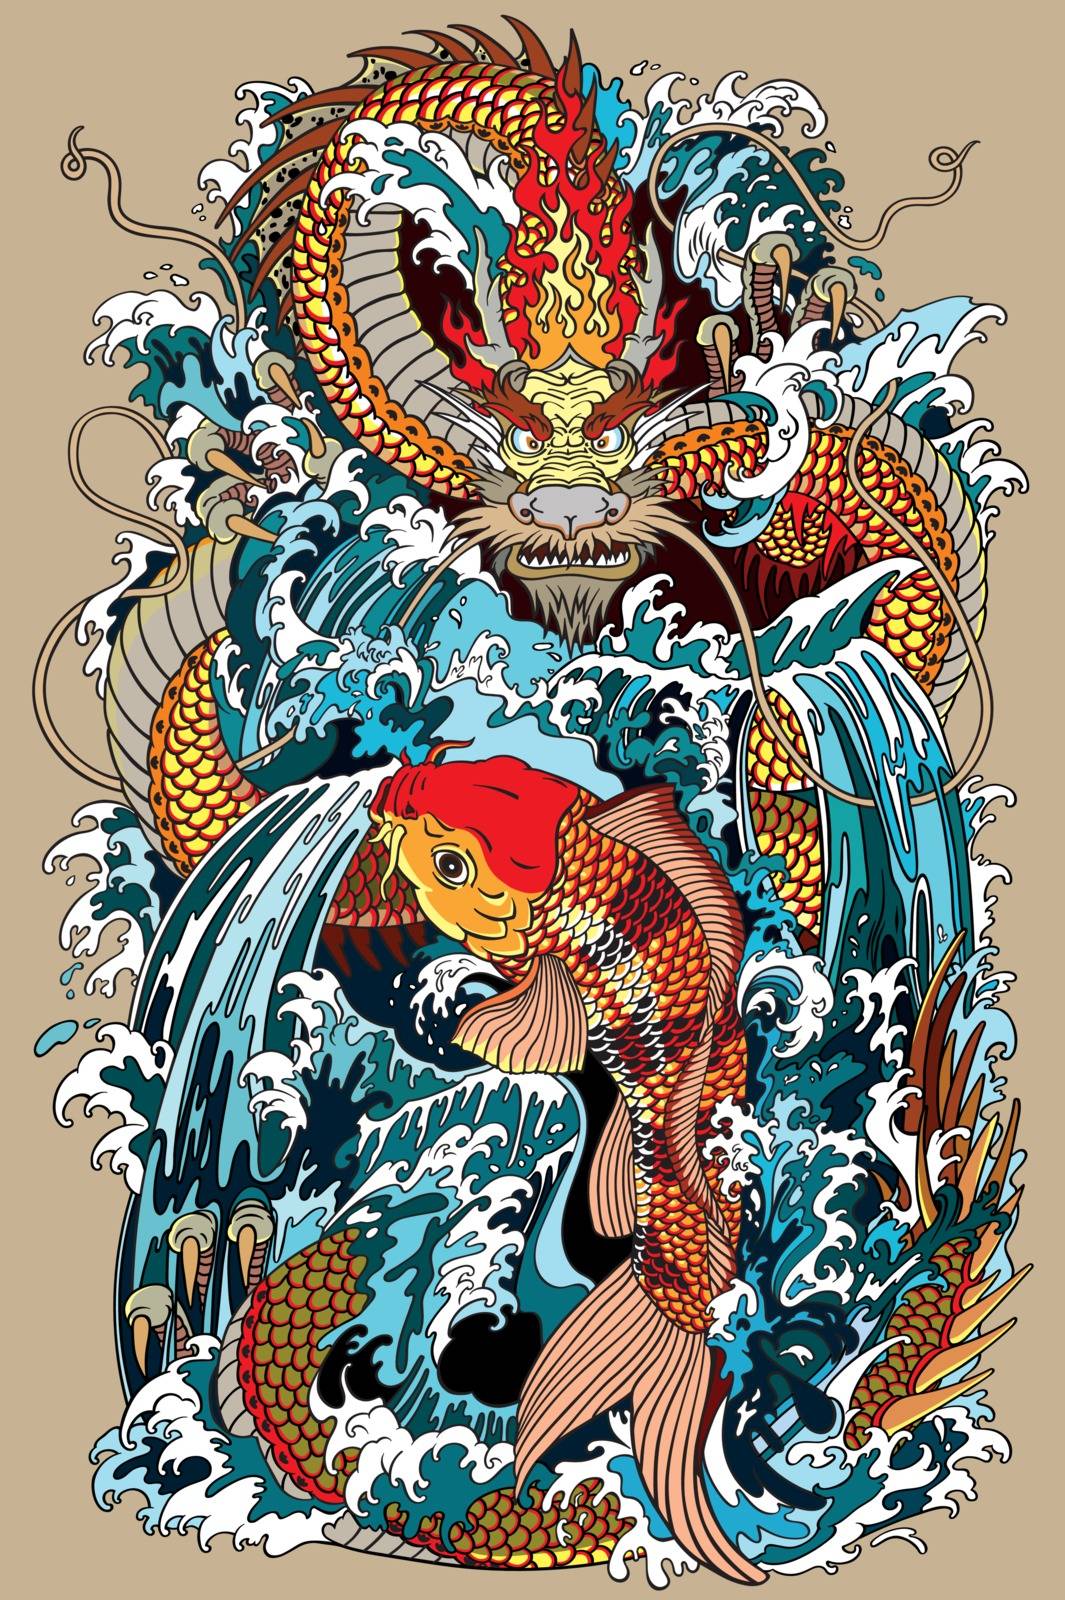 koi carp fish and dragon gate illustration according Asian mythology by insima